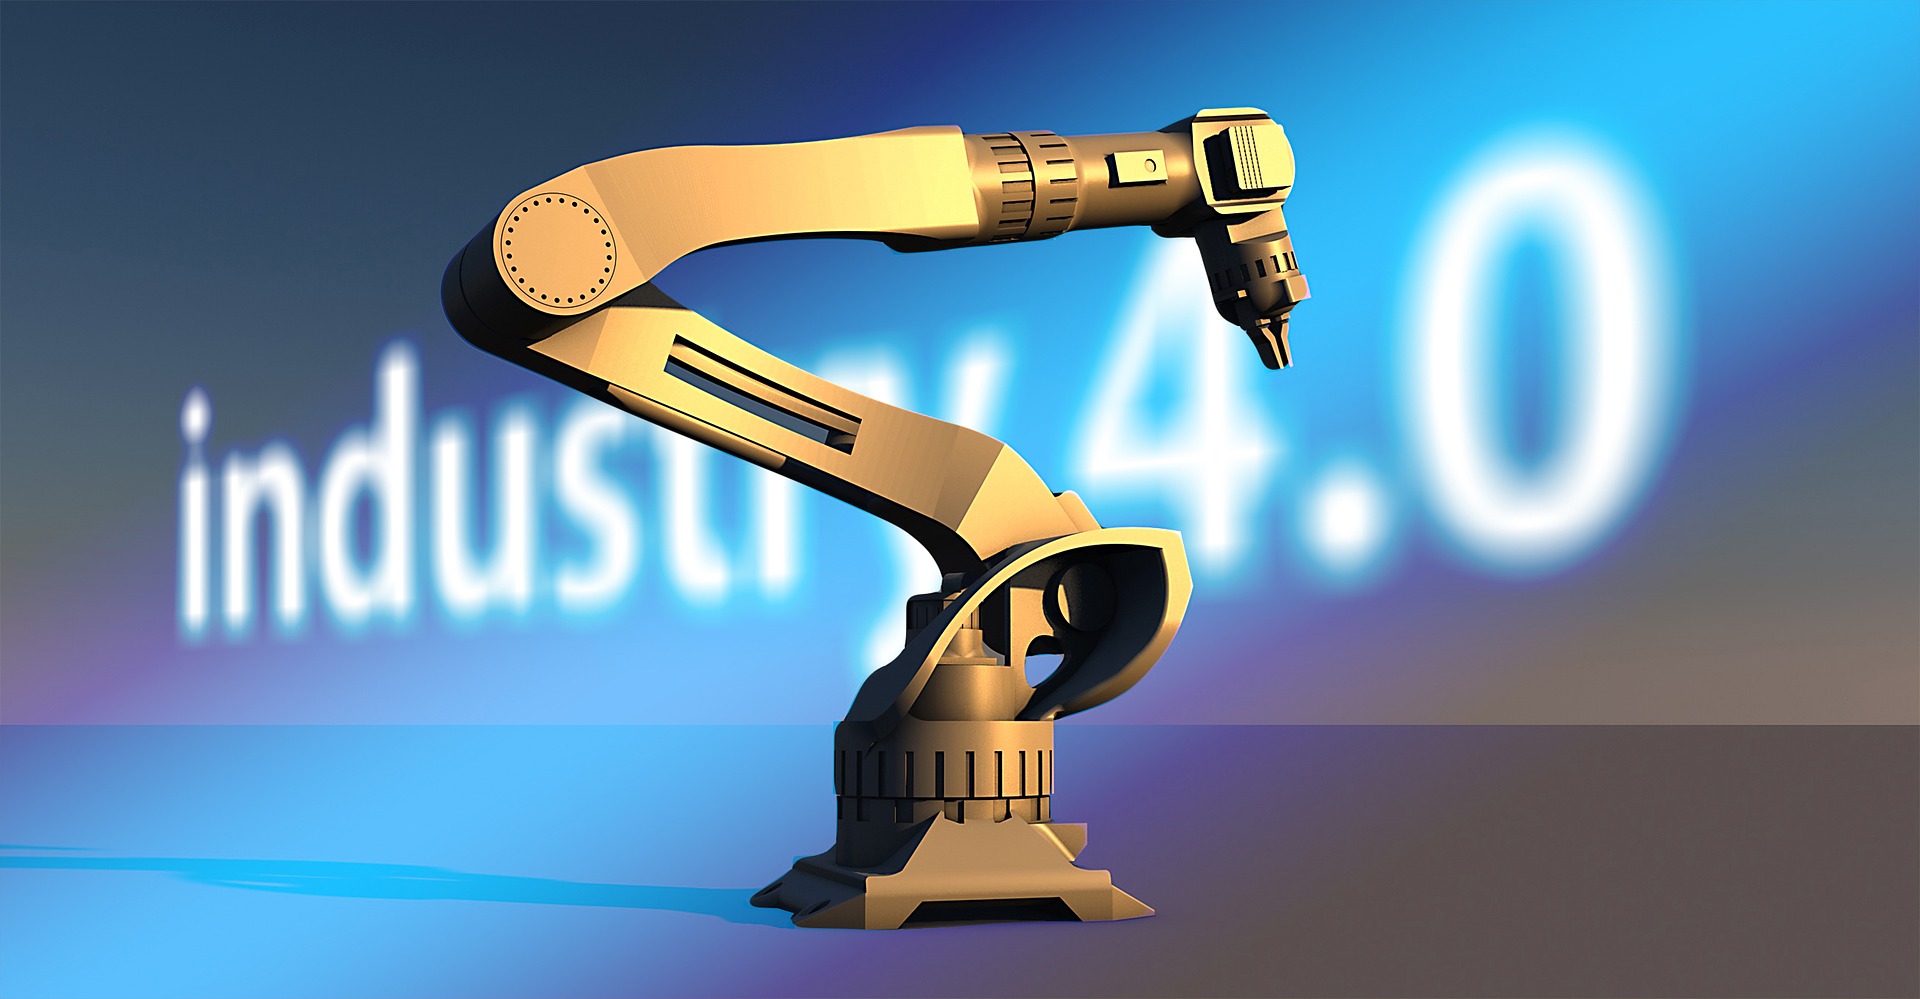 Roboter Industrie 4.0